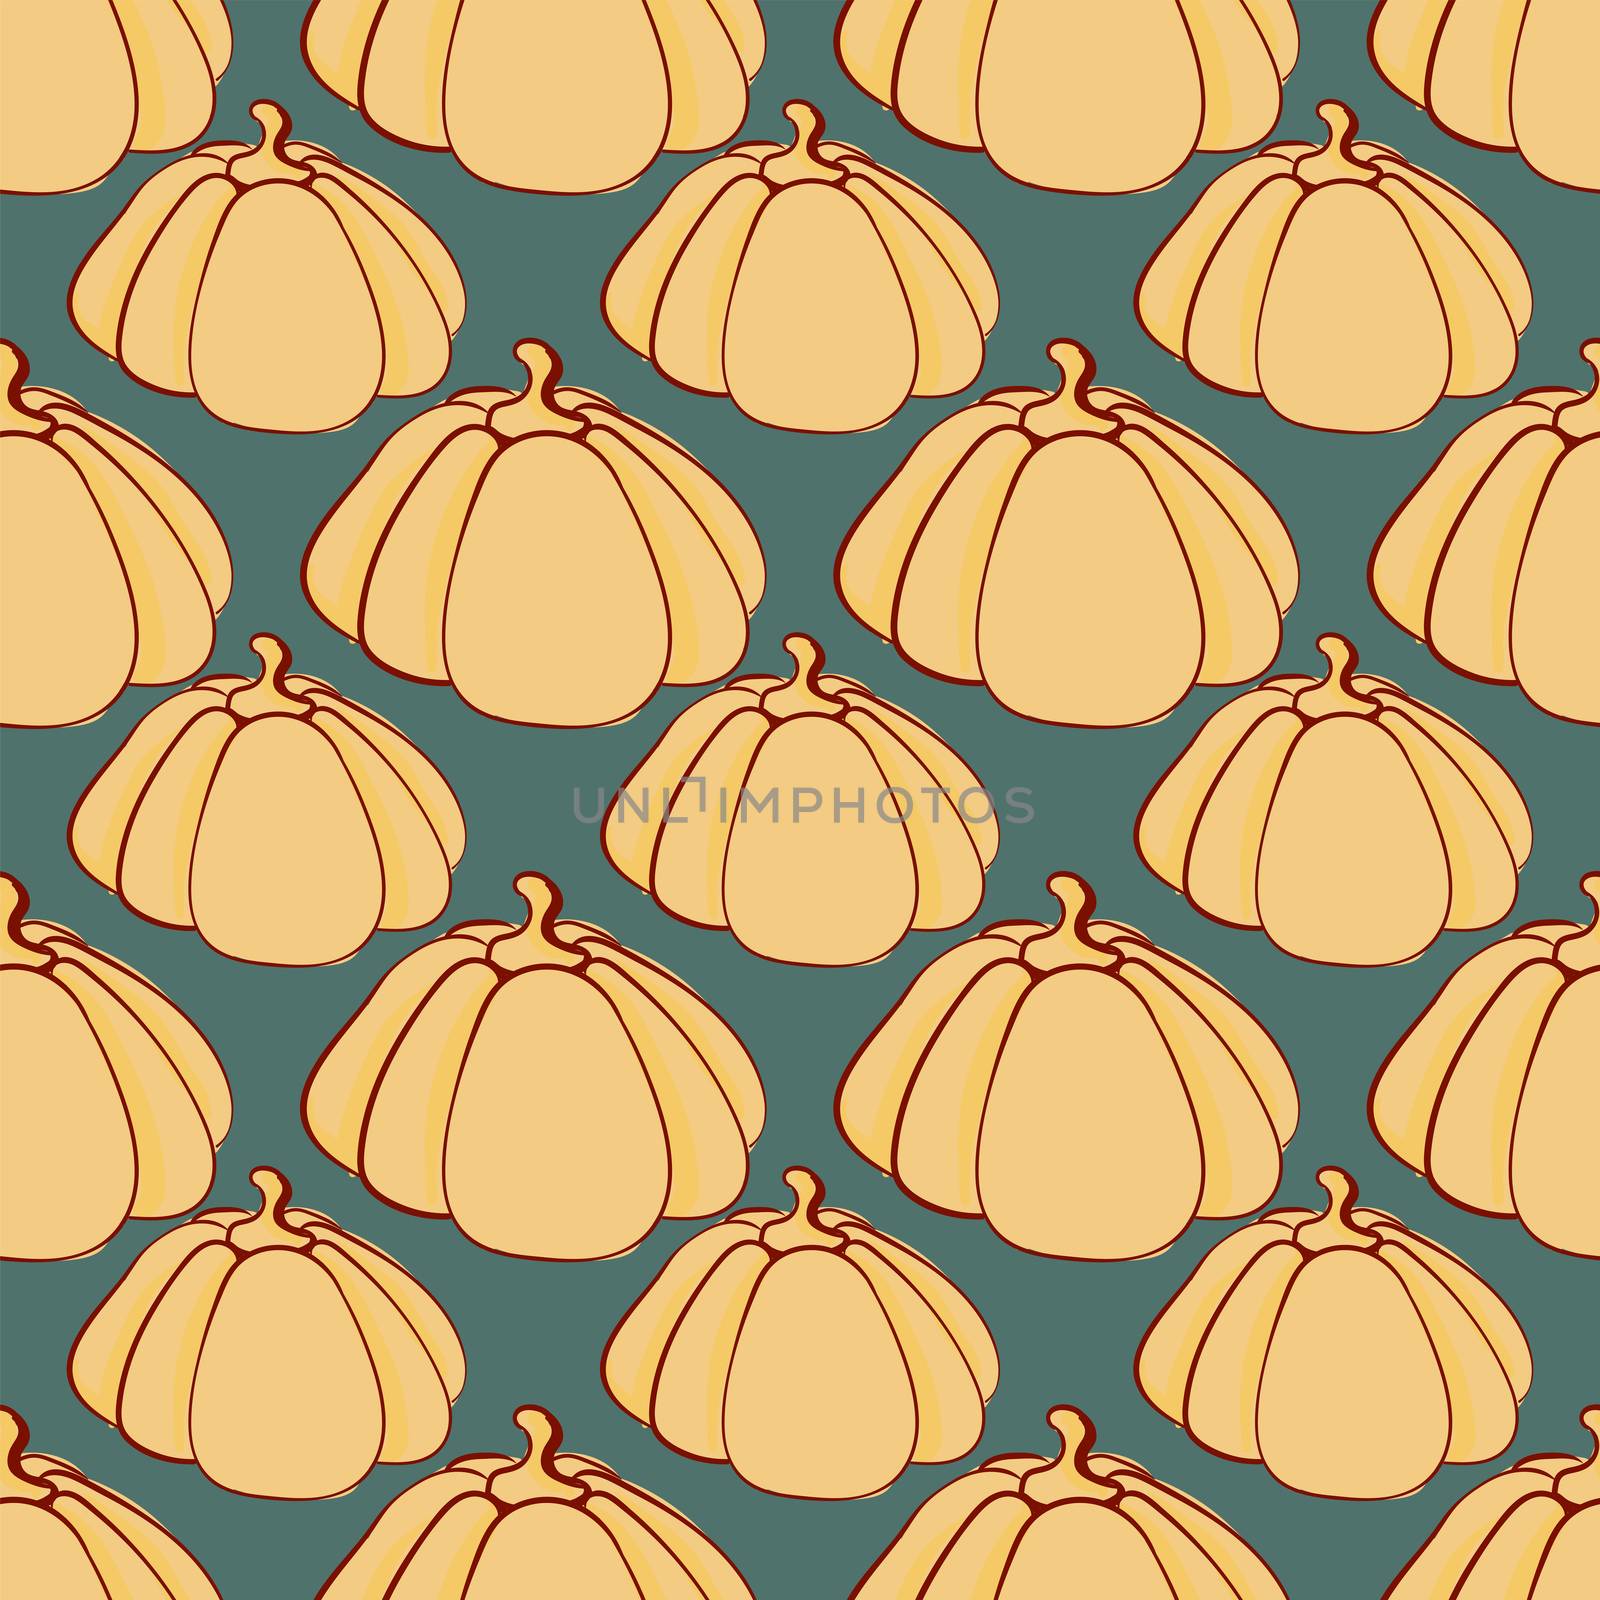 Pumpkins pattern , illustration, vector on white background by Morphart